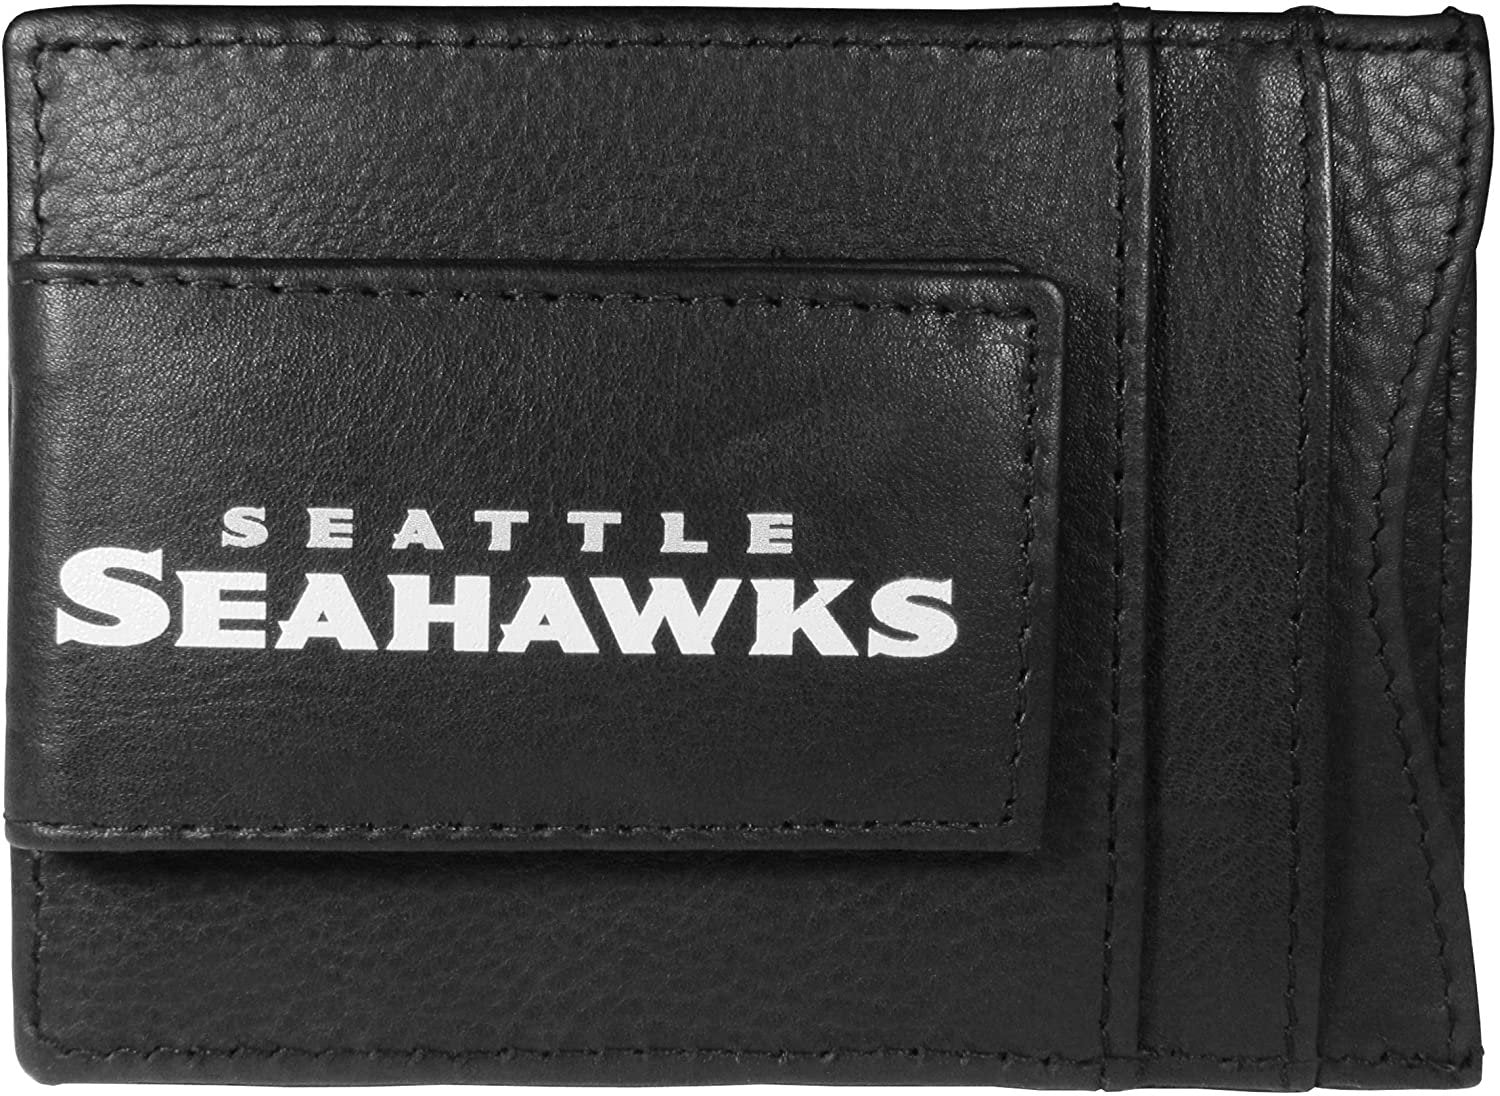 Seattle Seahawks Black Leather Wallet, Front Pocket Magnetic Money Clip, Printed Logo